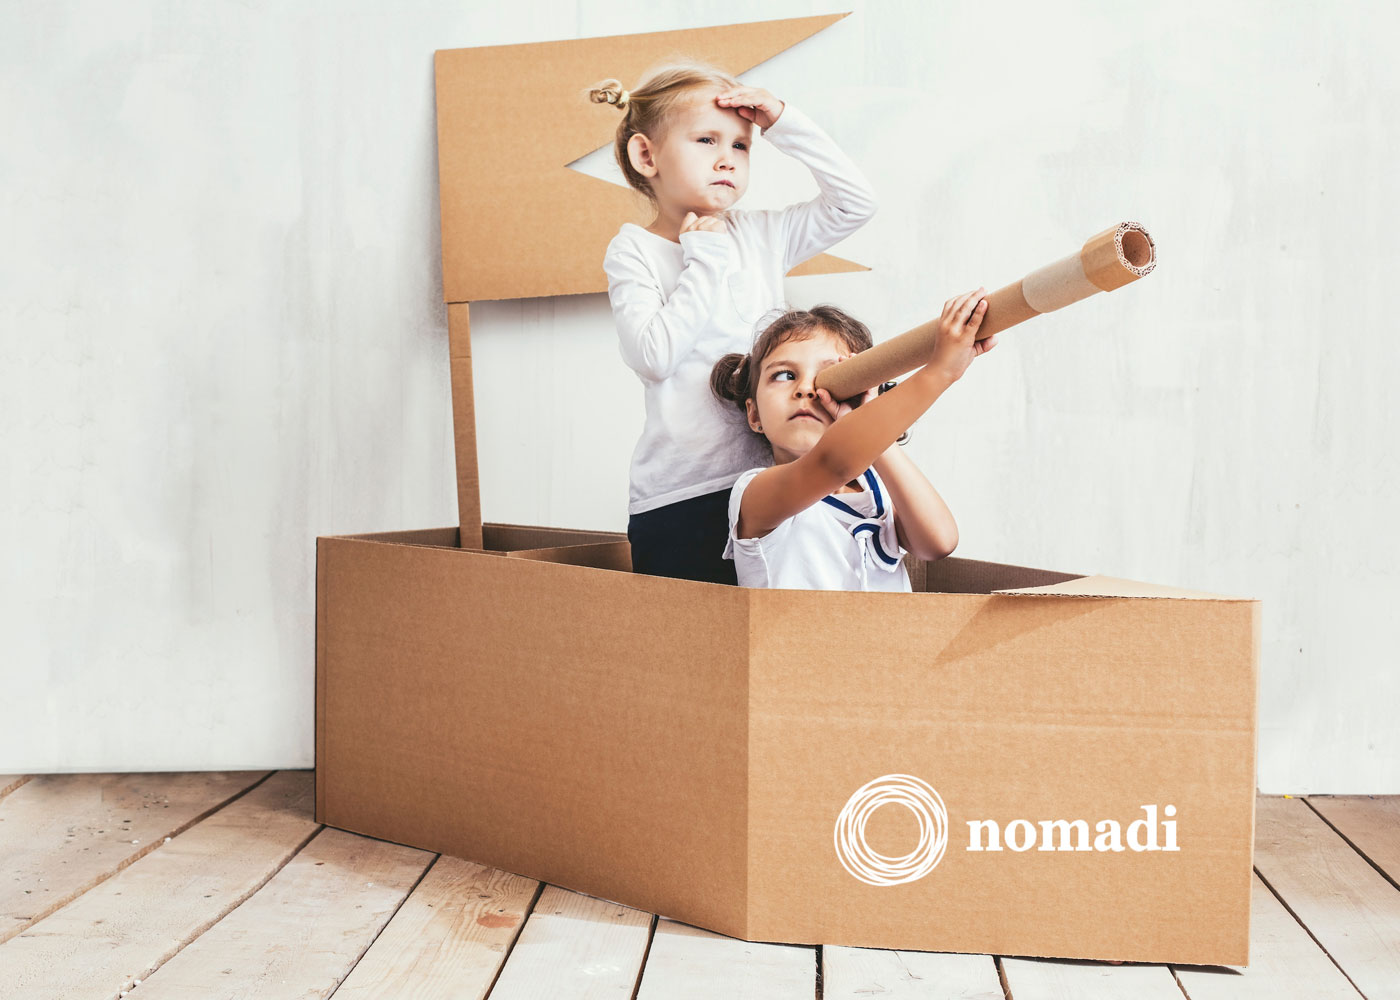 Kindersachen, Möbel, Spielzeug mieten statt kaufen bei nomadi // HIMBEER